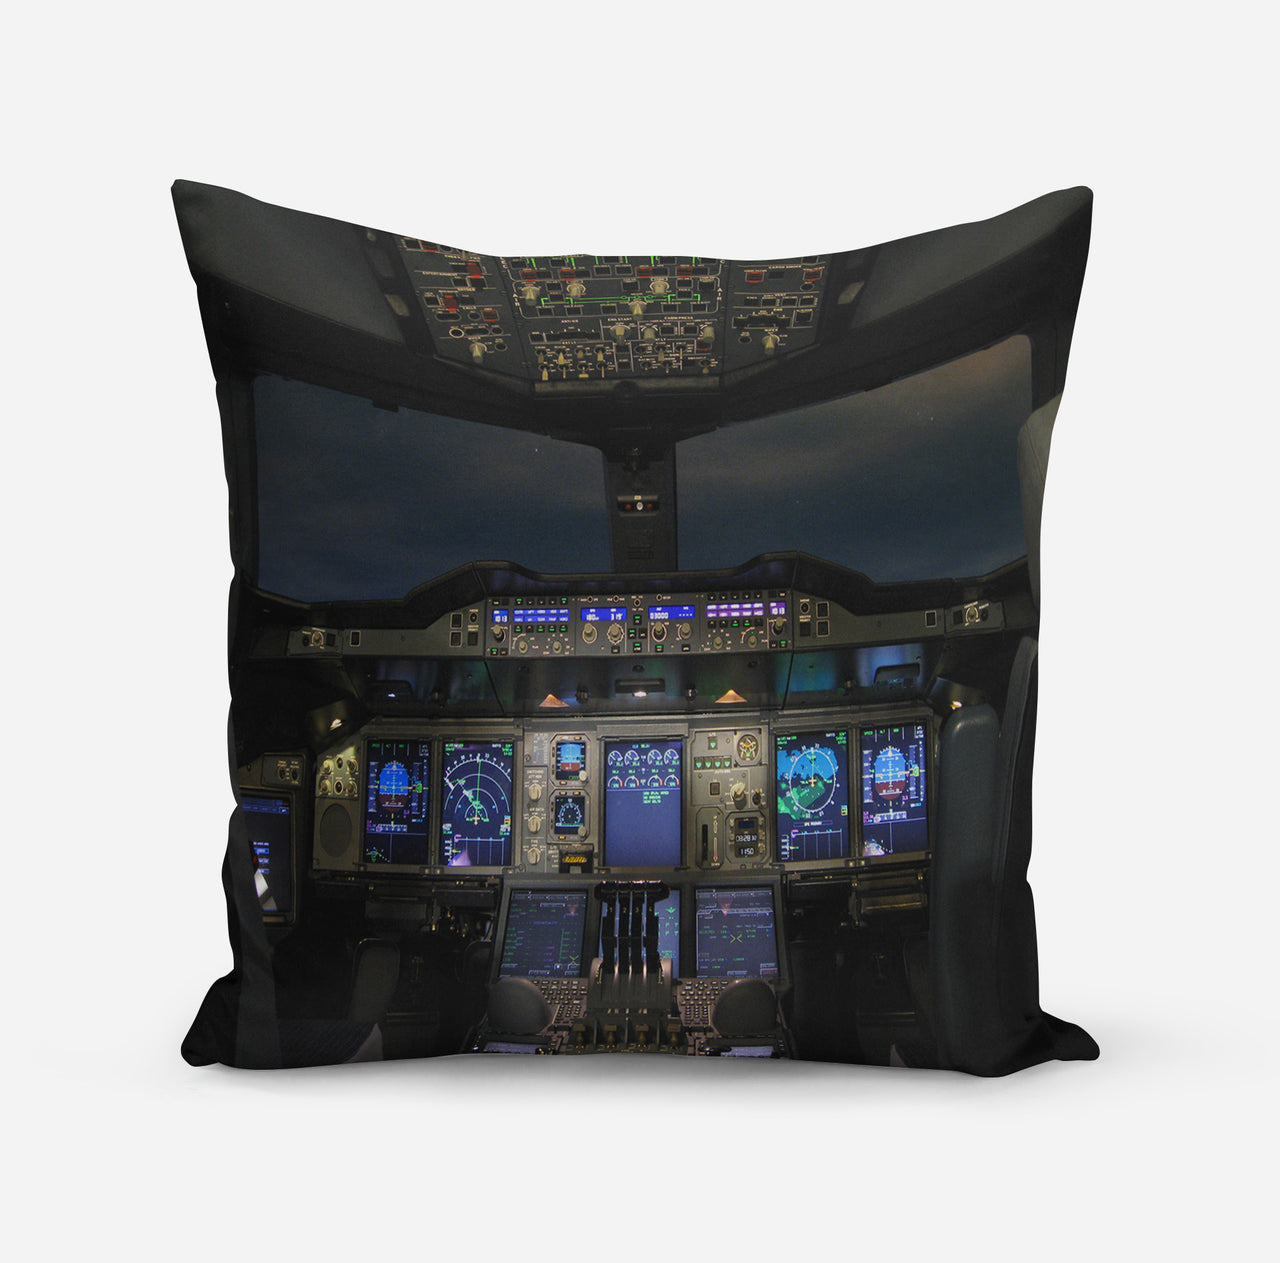 Airbus A380 Cockpit Designed Pillows